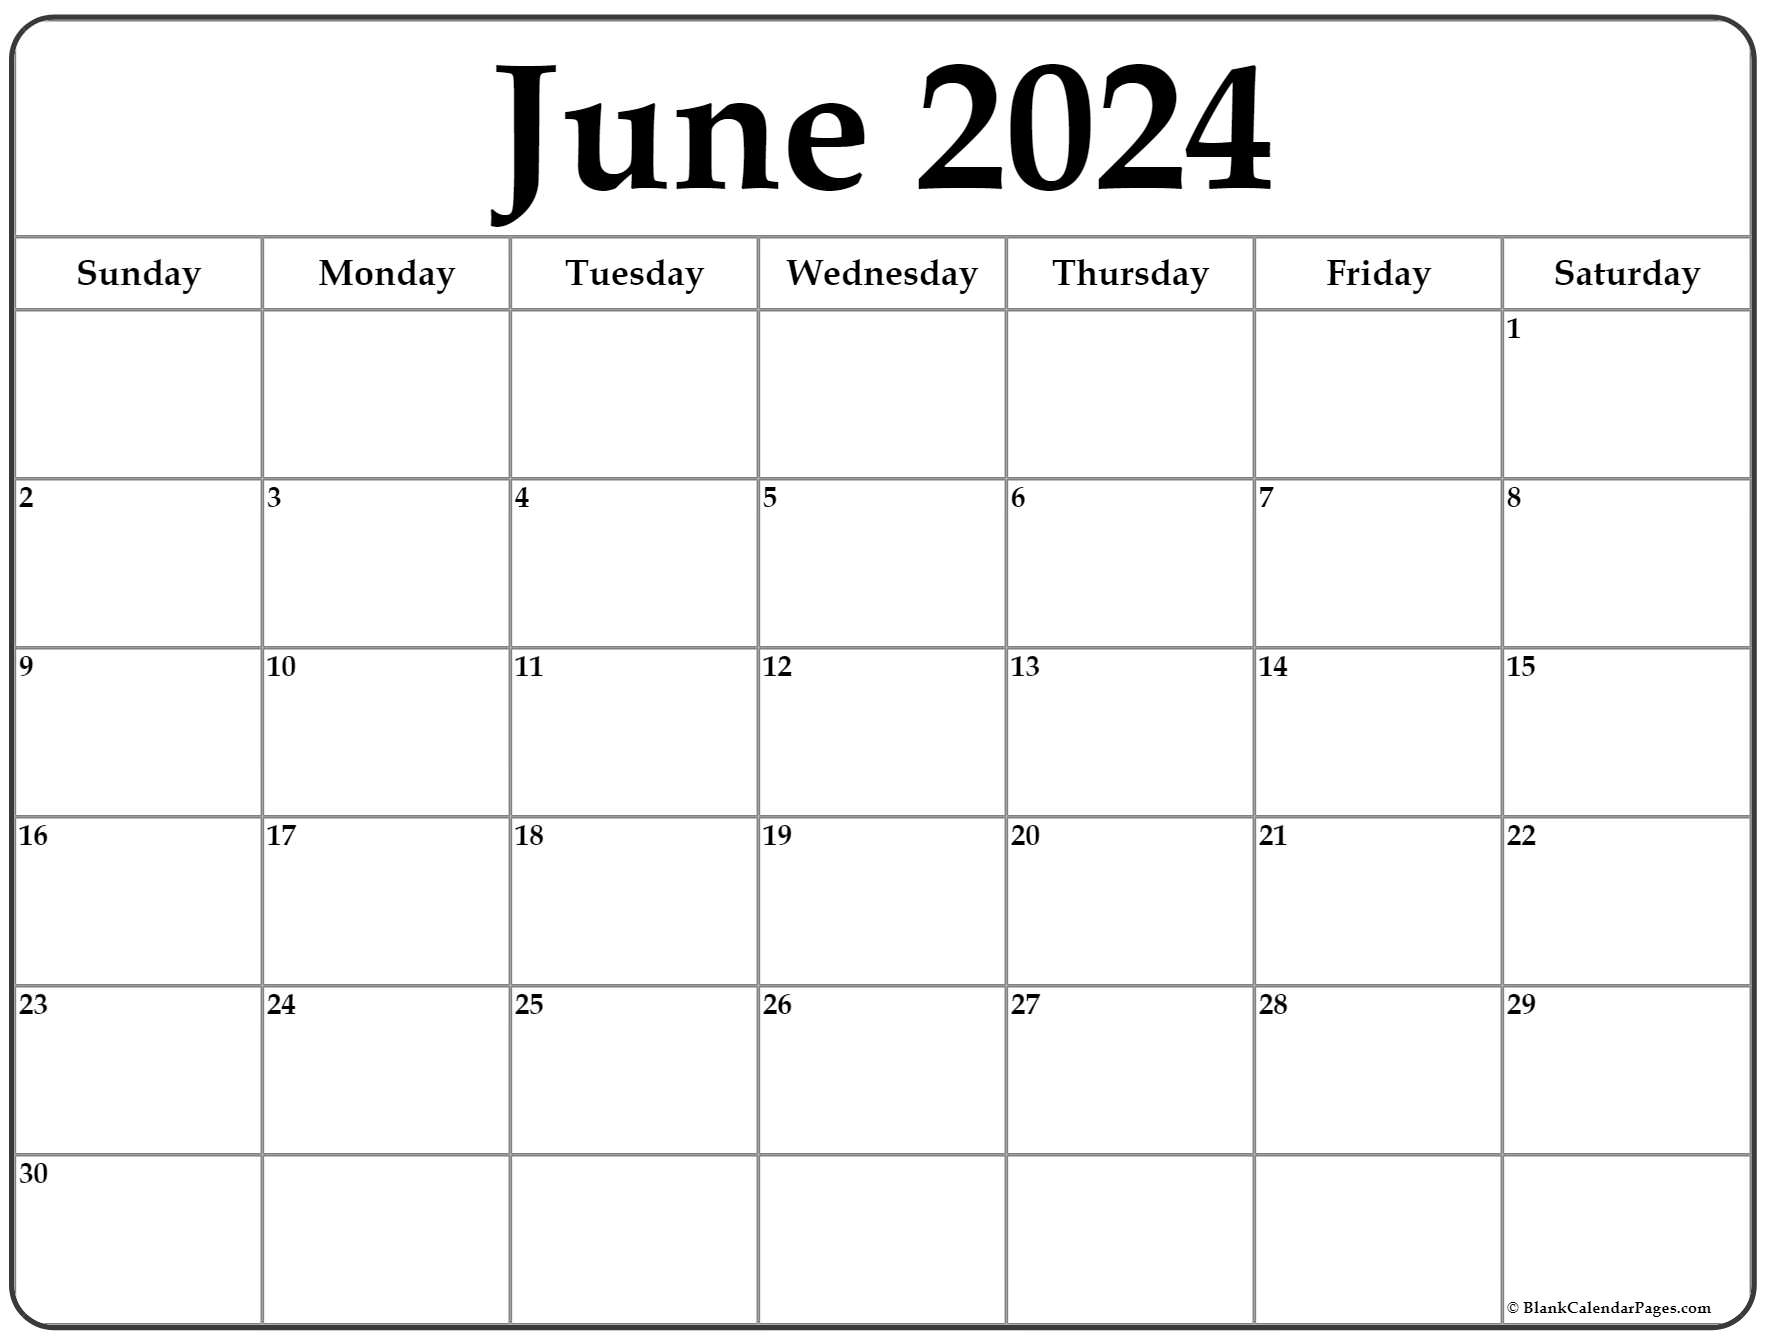 June Month Calendar 2022 June 2022 Calendar | Free Printable Calendar Templates